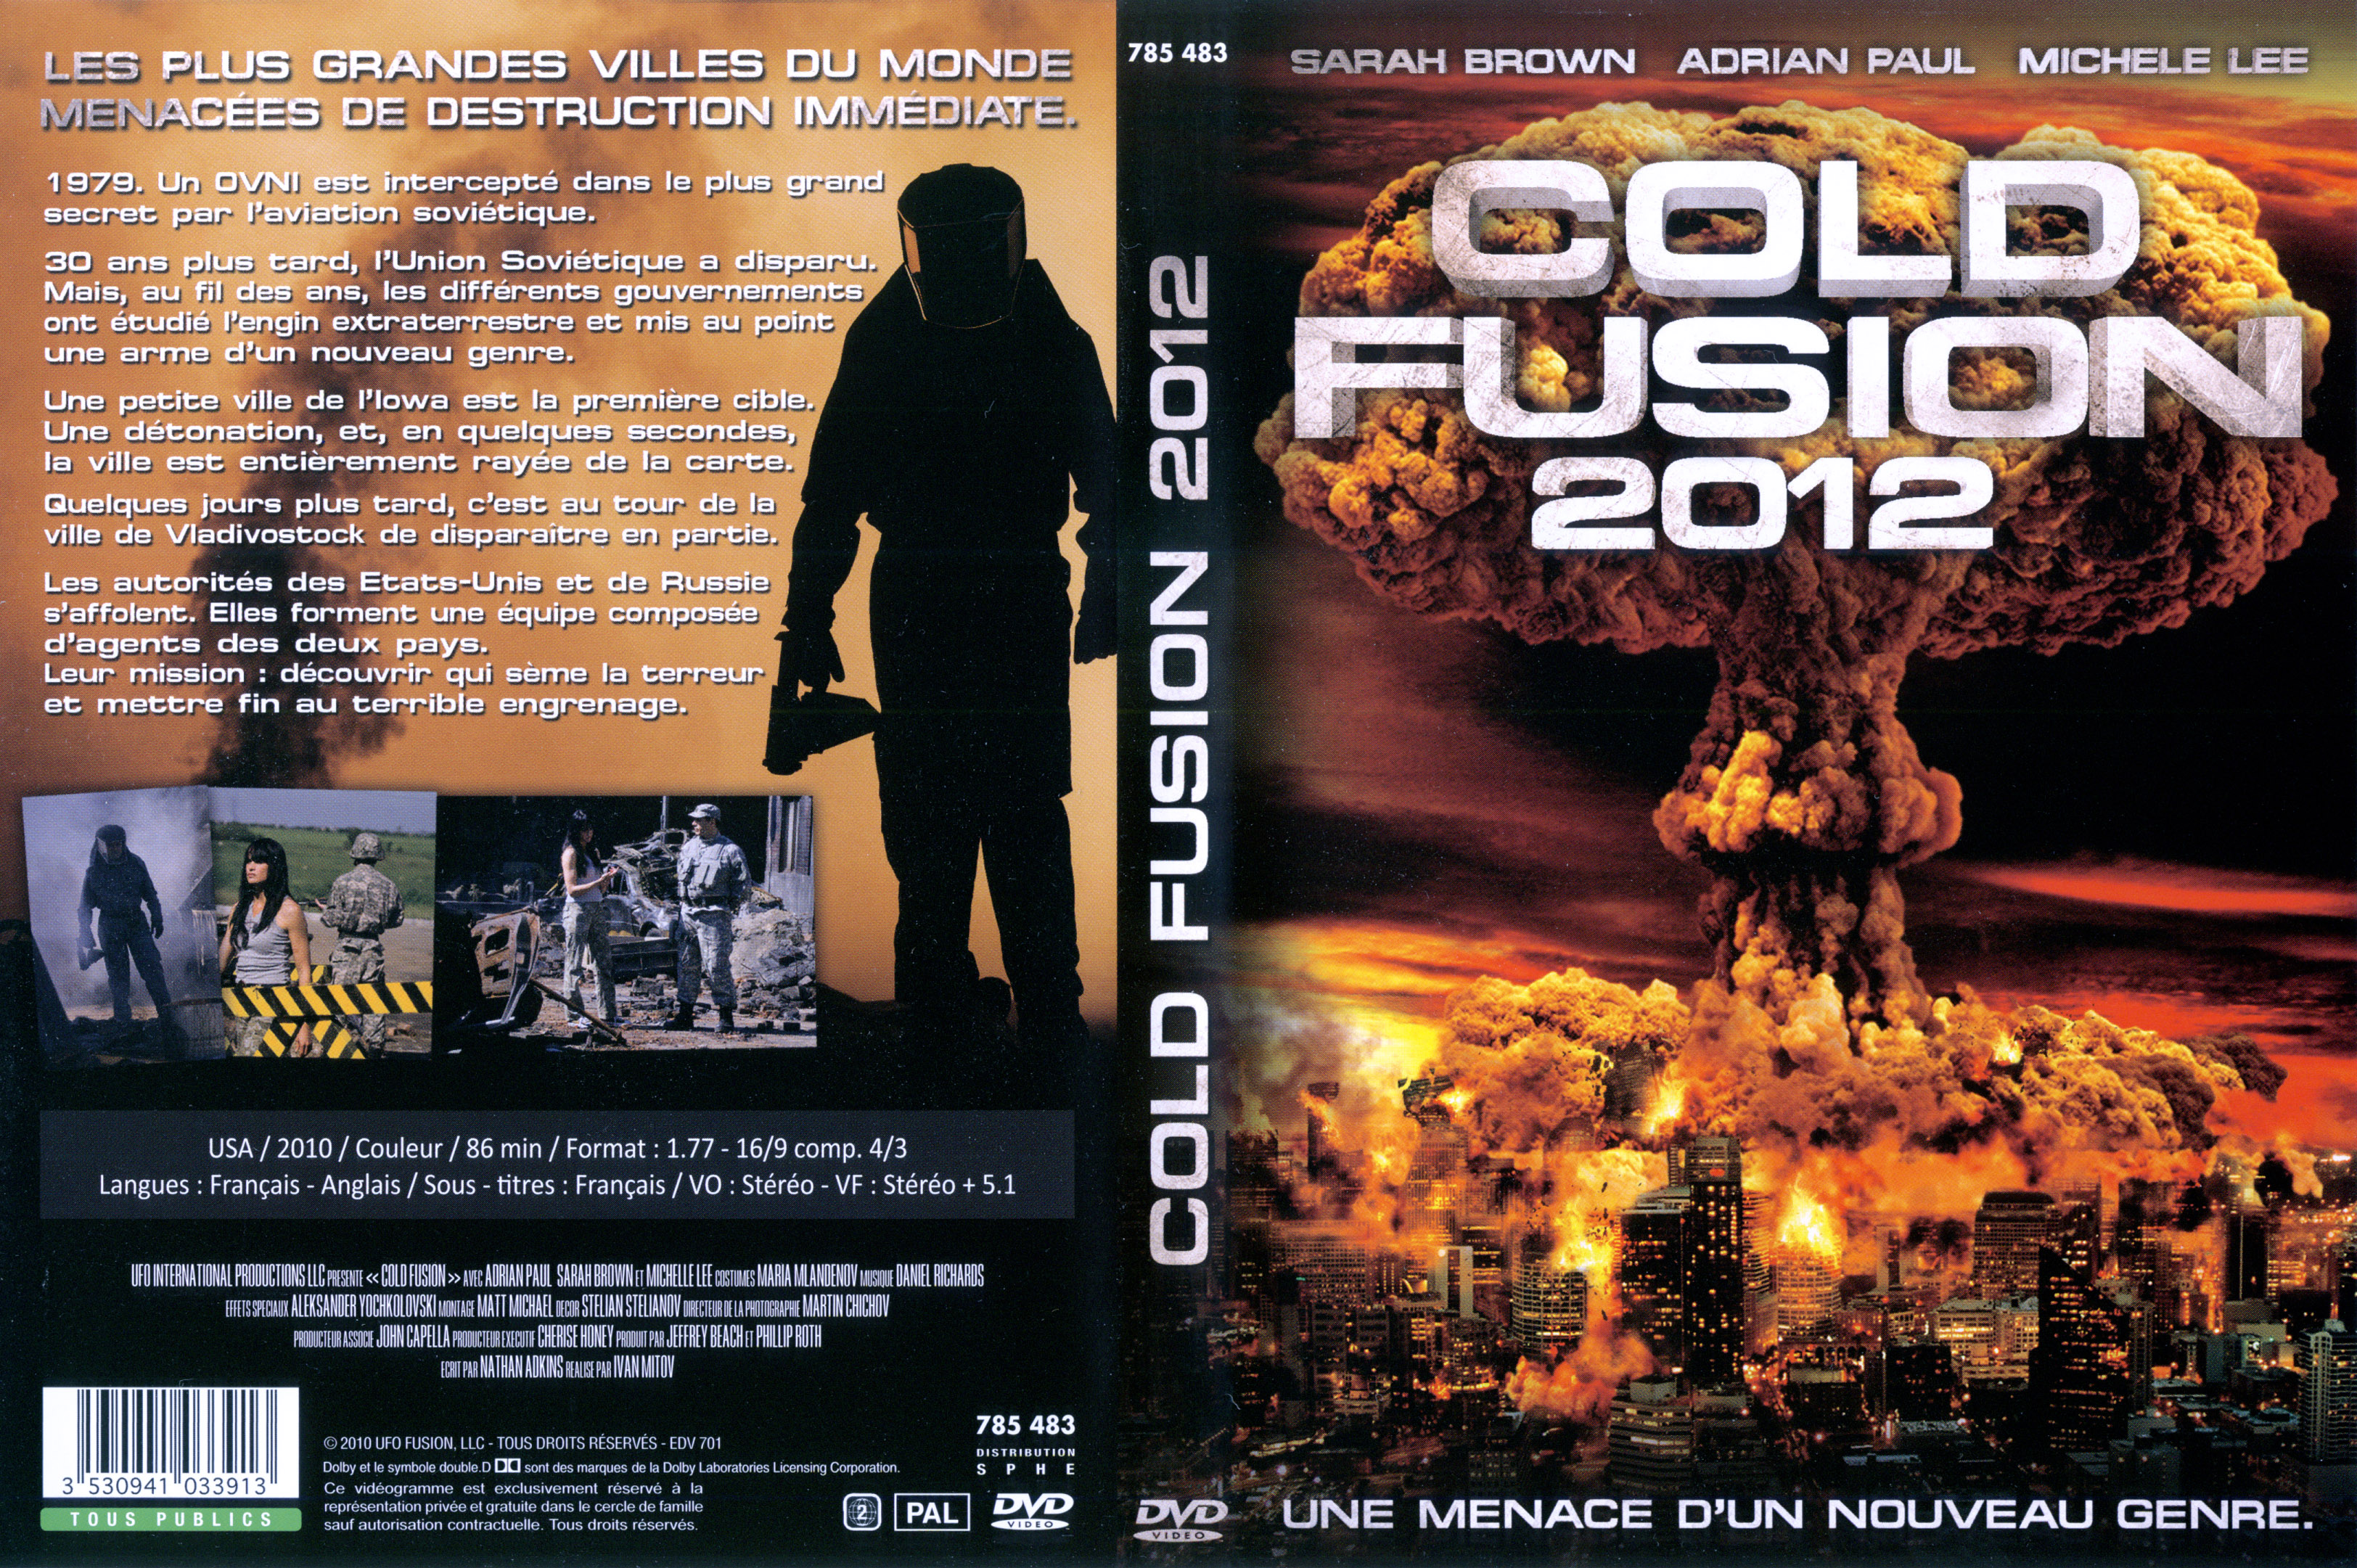 Jaquette DVD Cold fusion